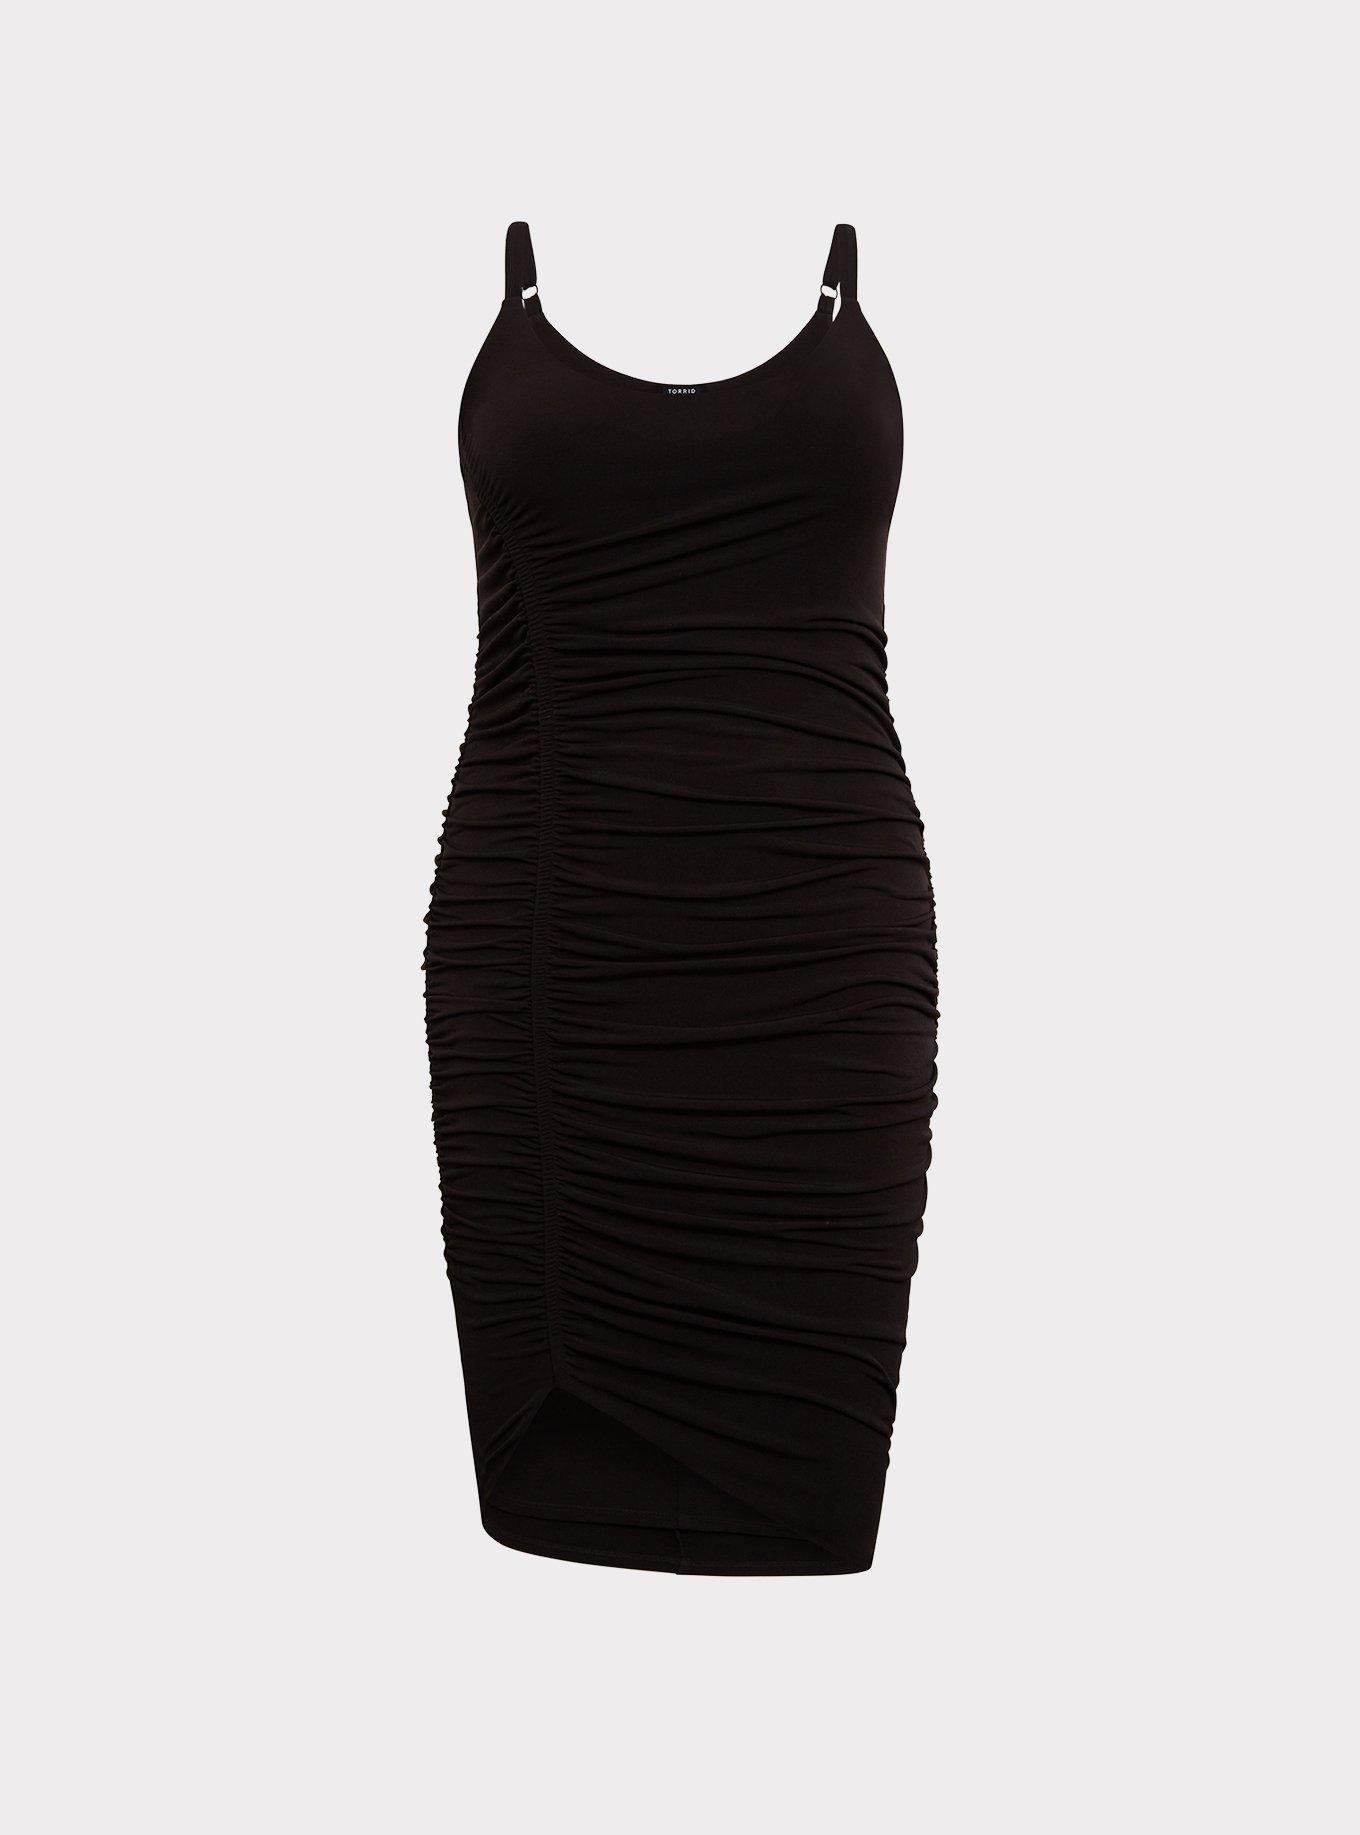 Plus Size - Black Studio Knit Bodycon Dress - Torrid